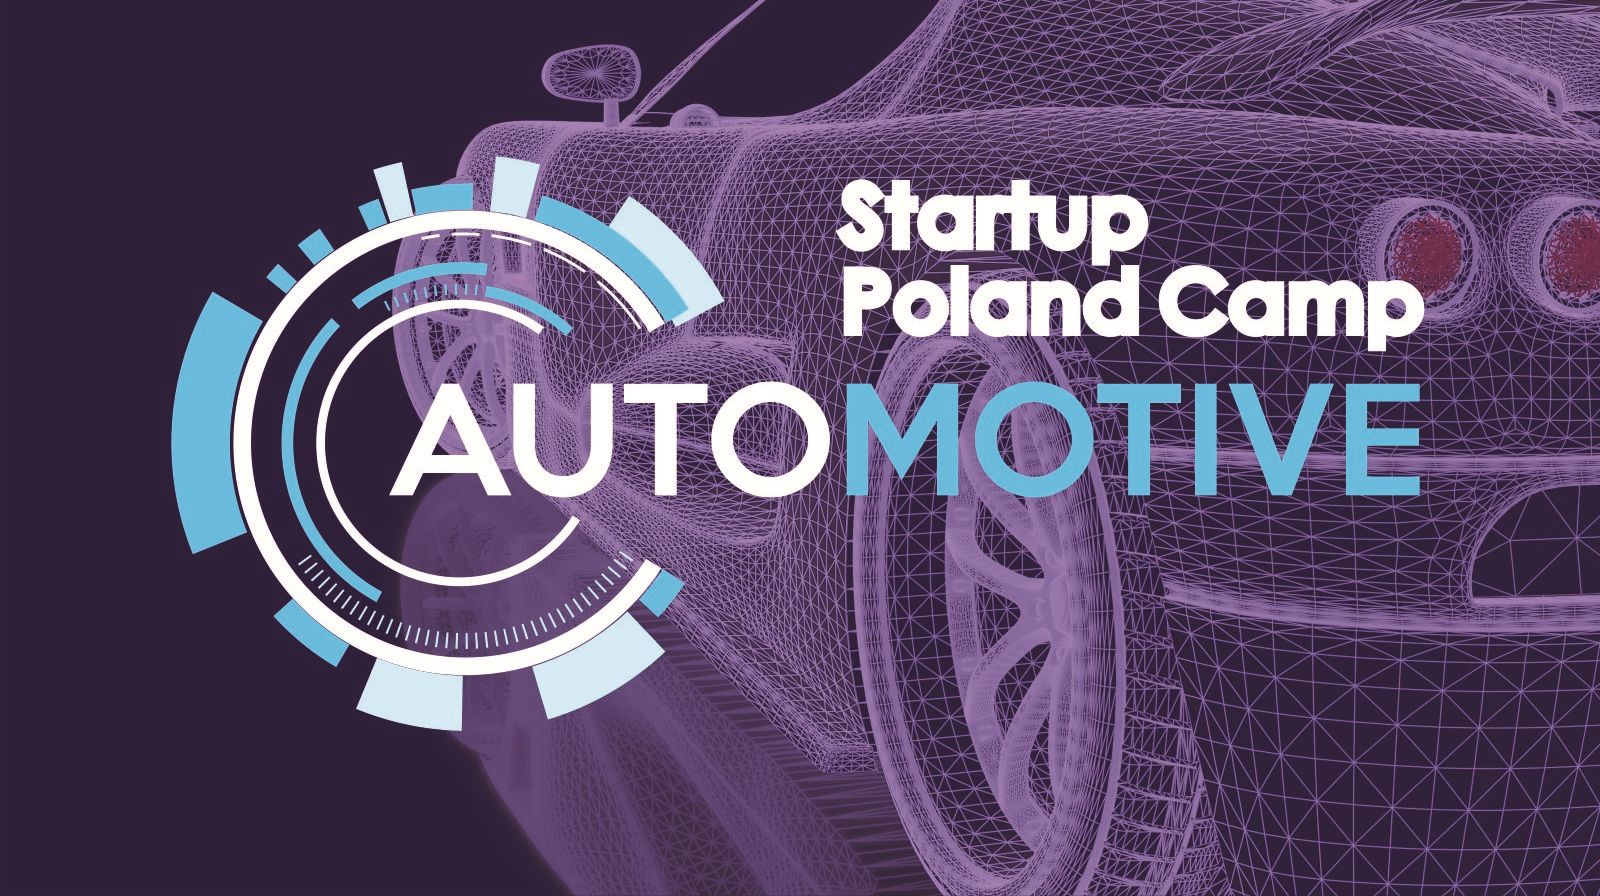 Startup-Poland-Camp-Automotive